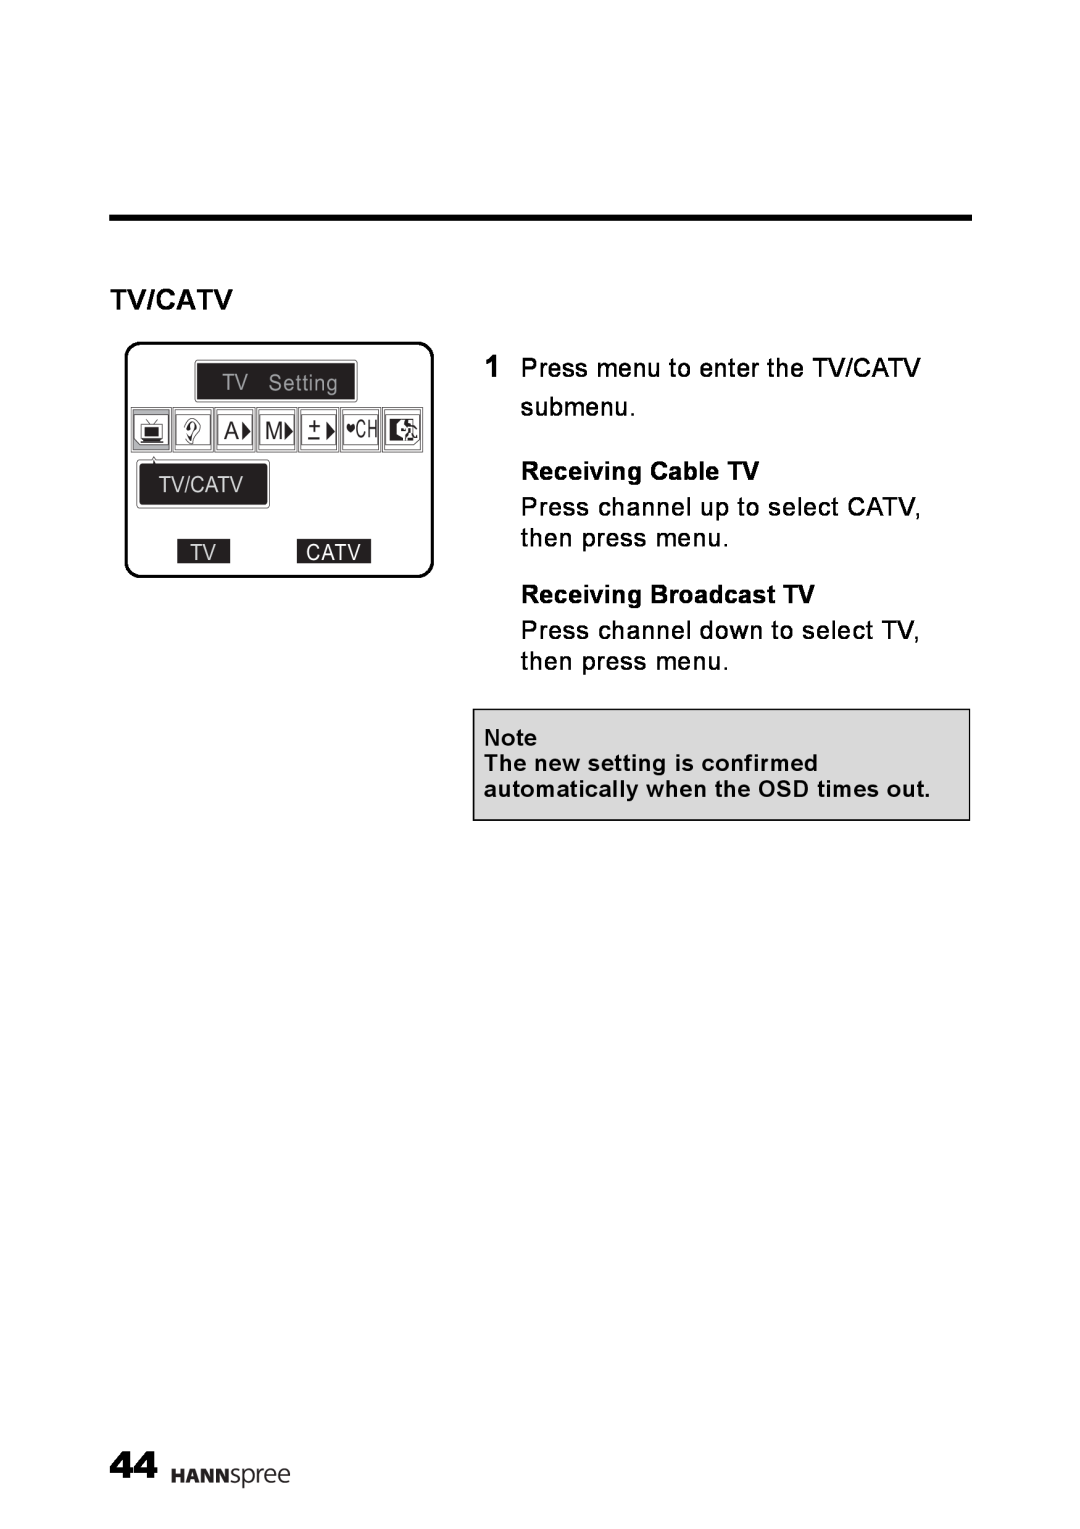 HANNspree LT09-10U1-000 user manual Tv/Catv, Receiving Cable TV, Receiving Broadcast TV, Setting 